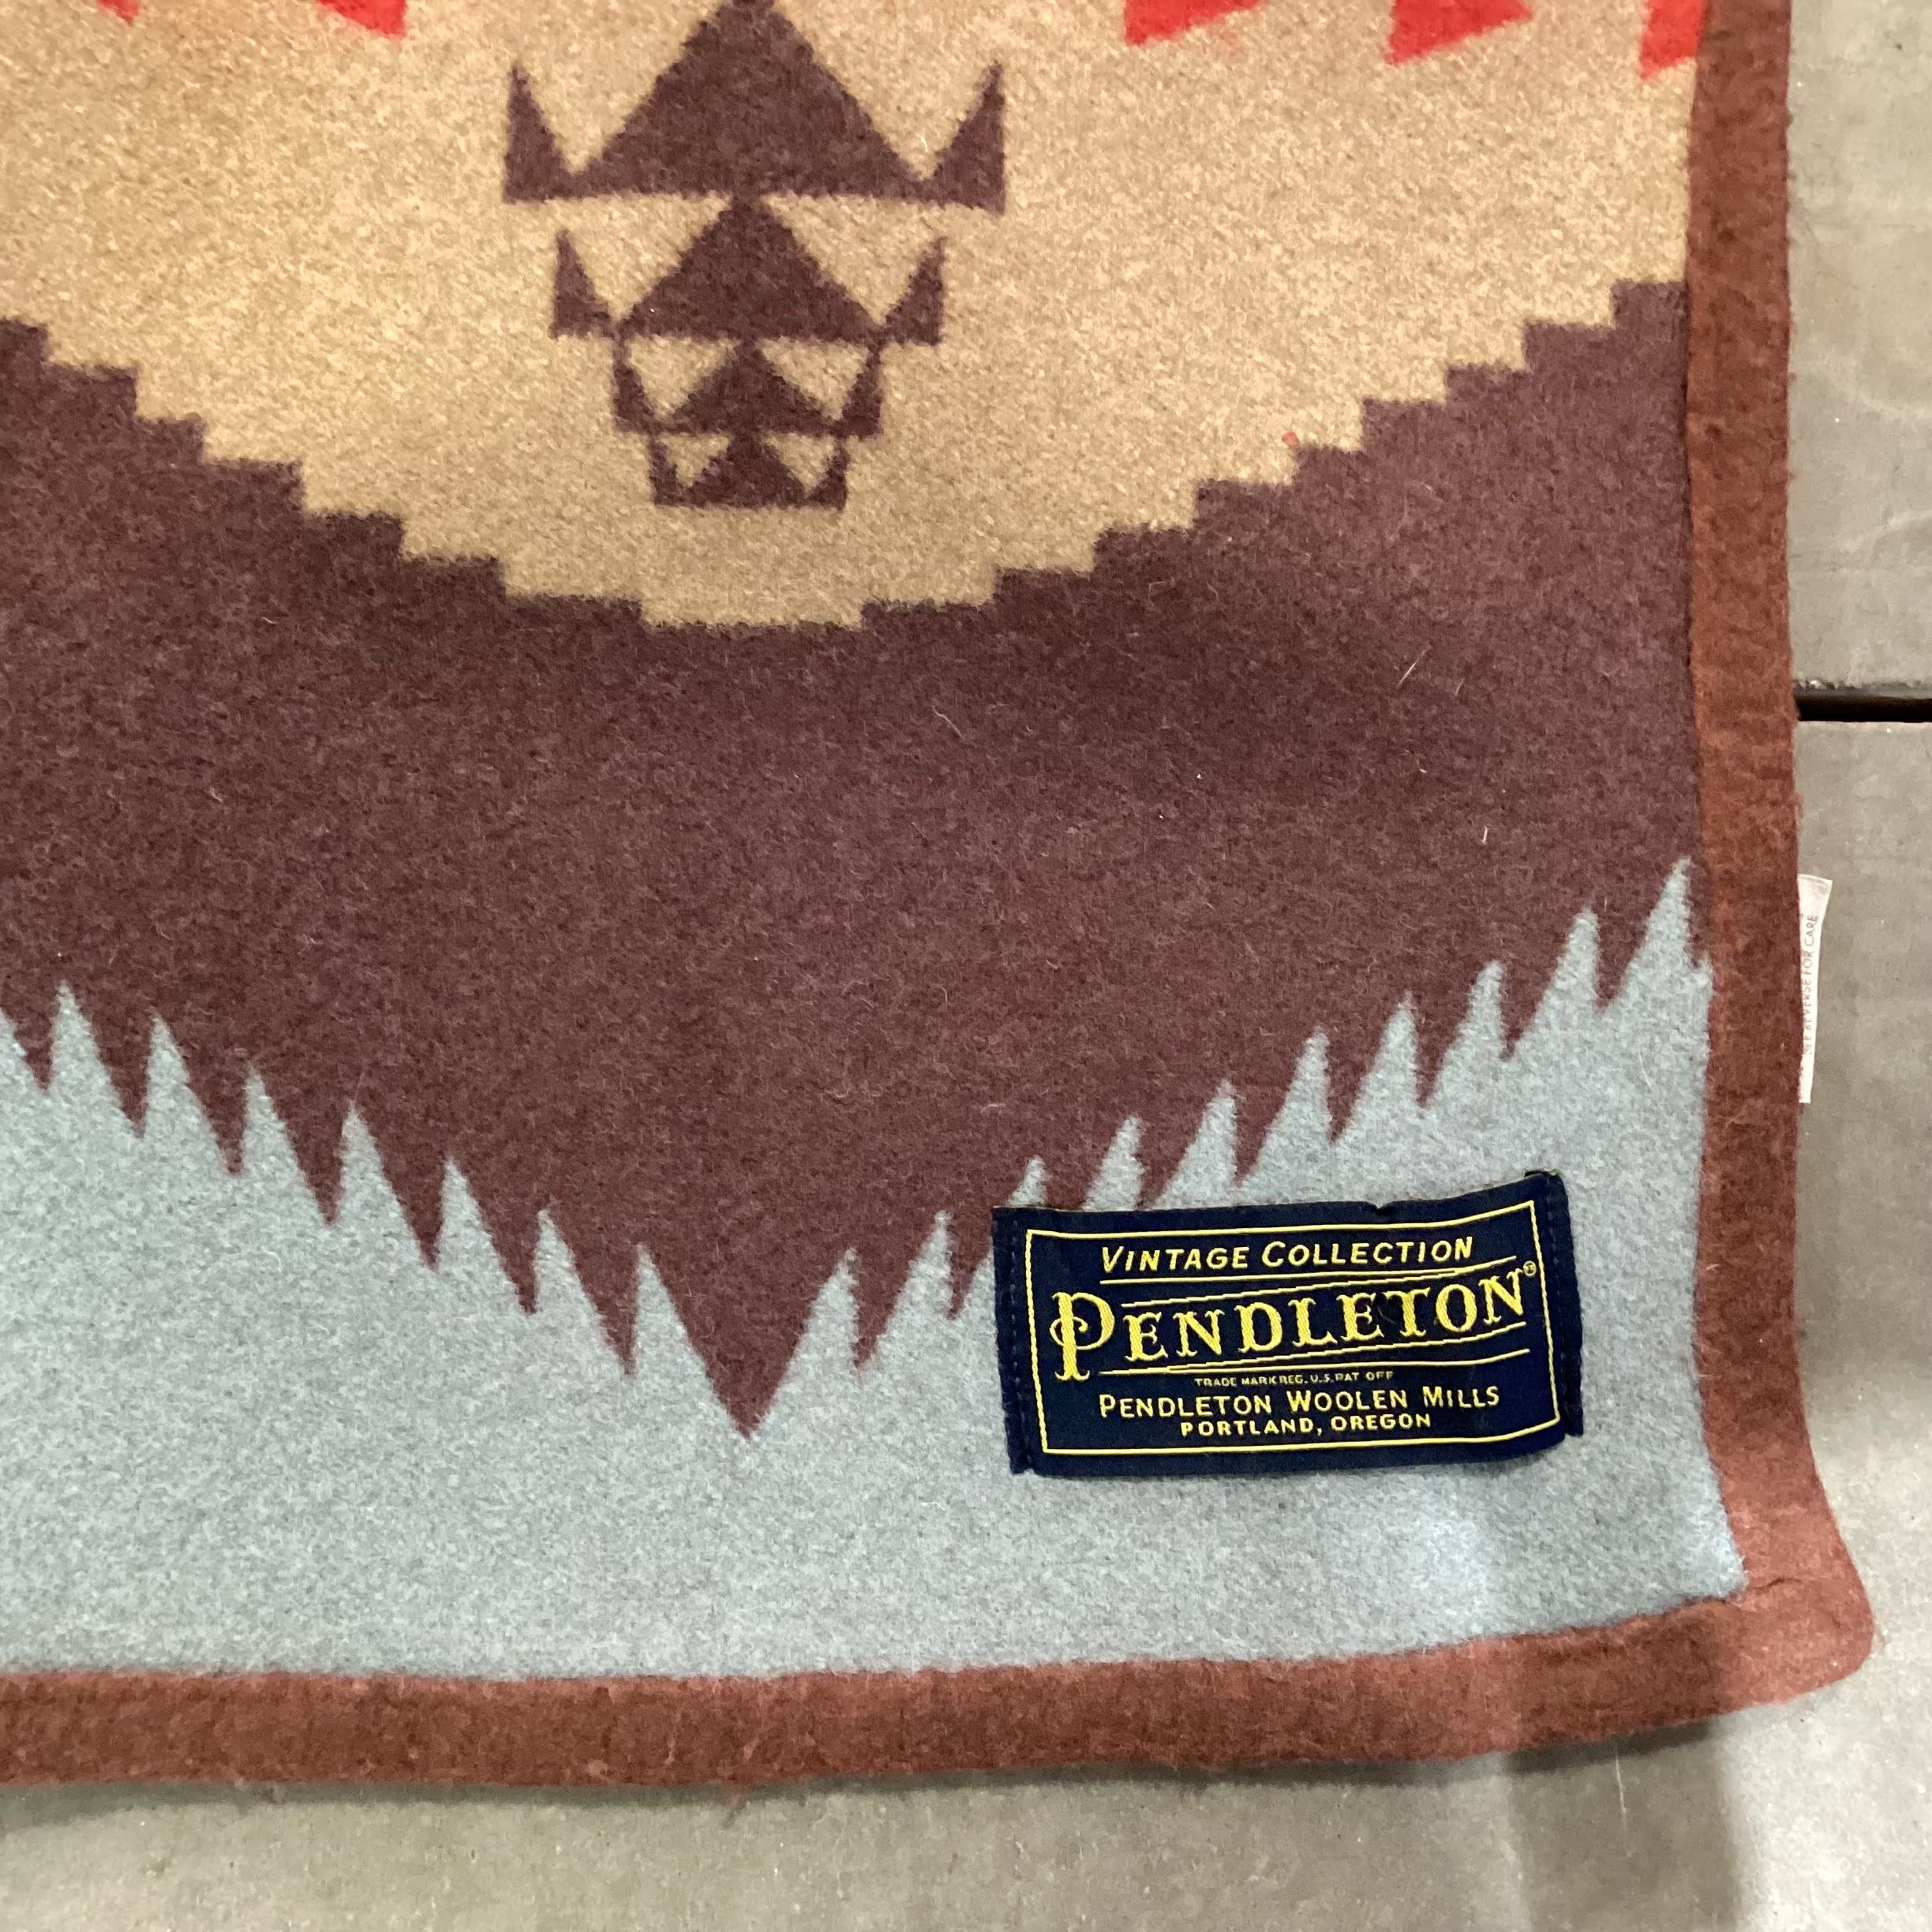 Pendleton Vintage Collection Wool Blanket